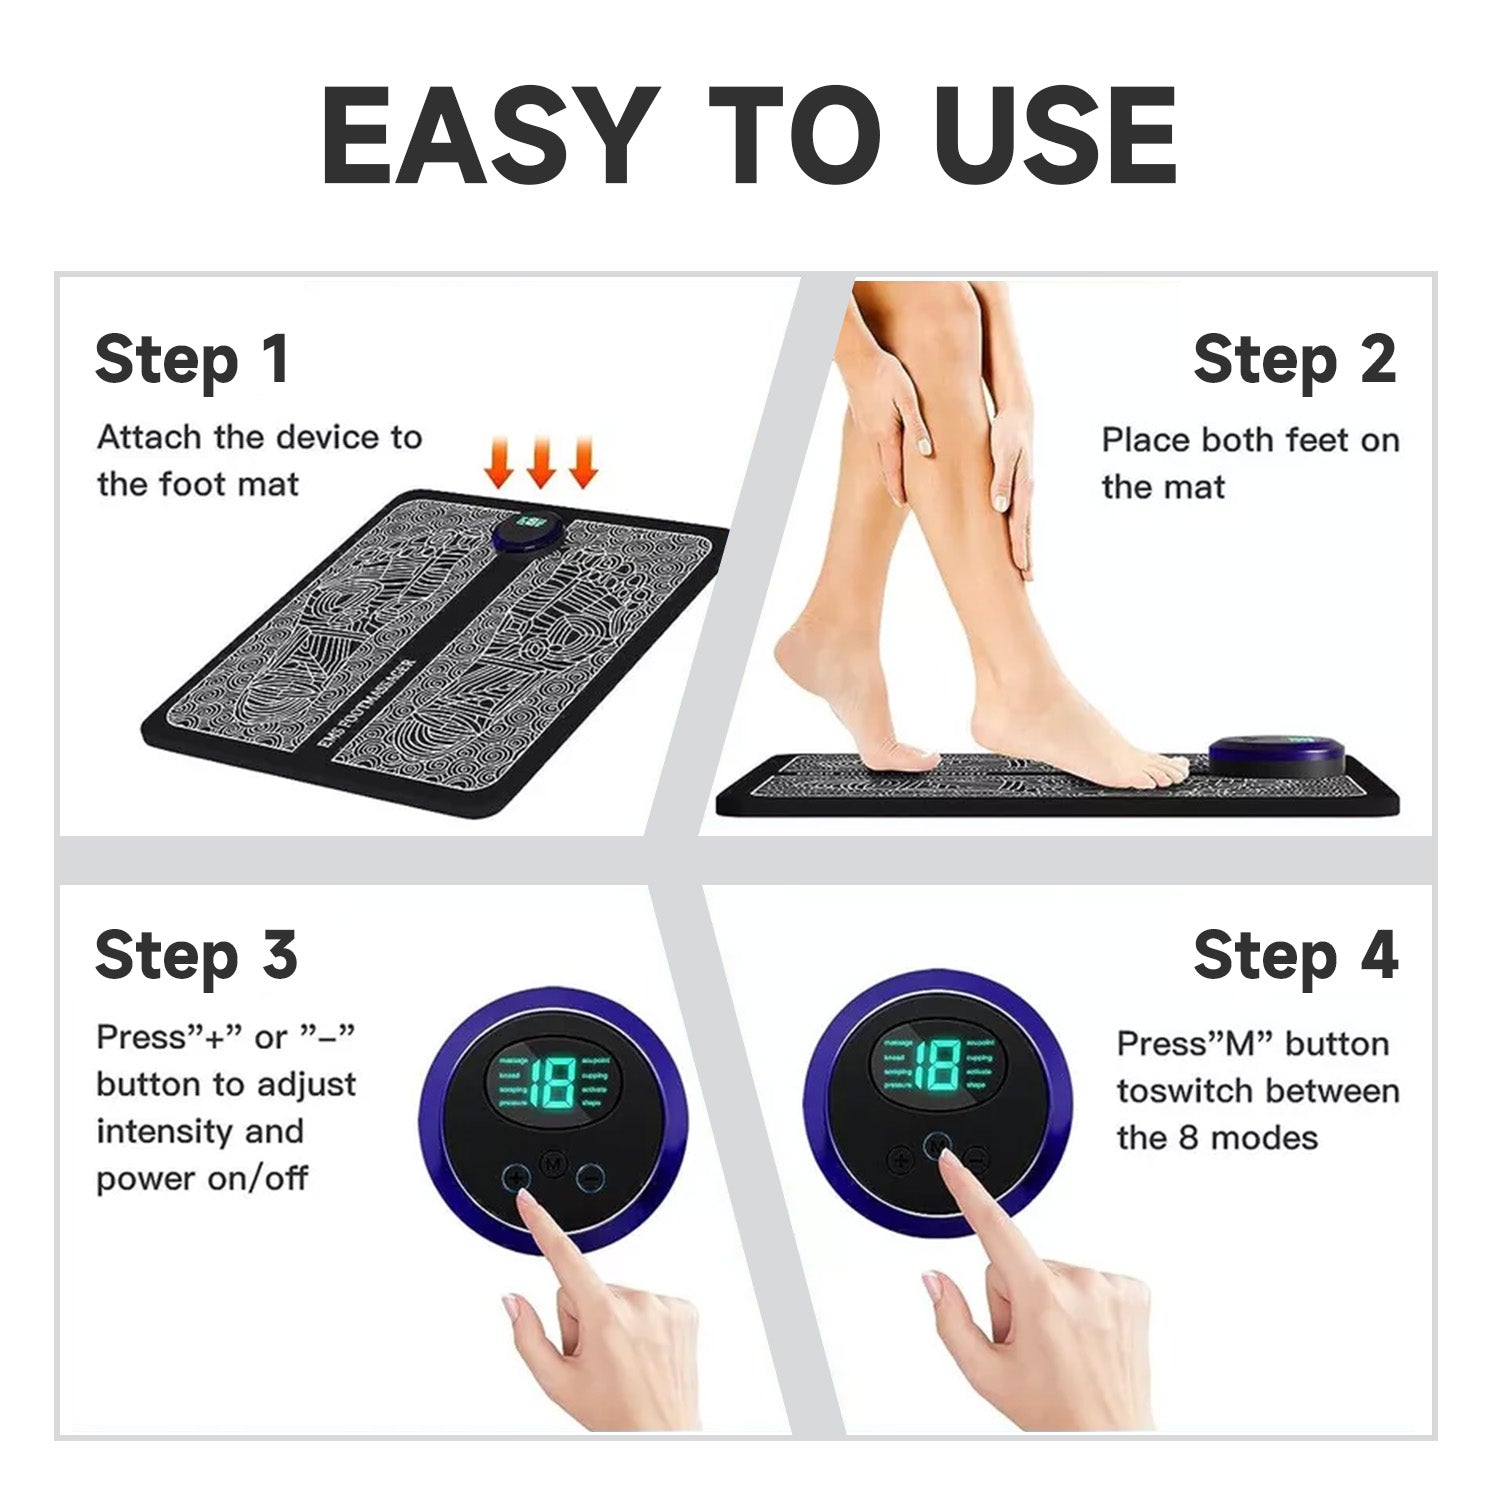 EMS Foot Massage Pad